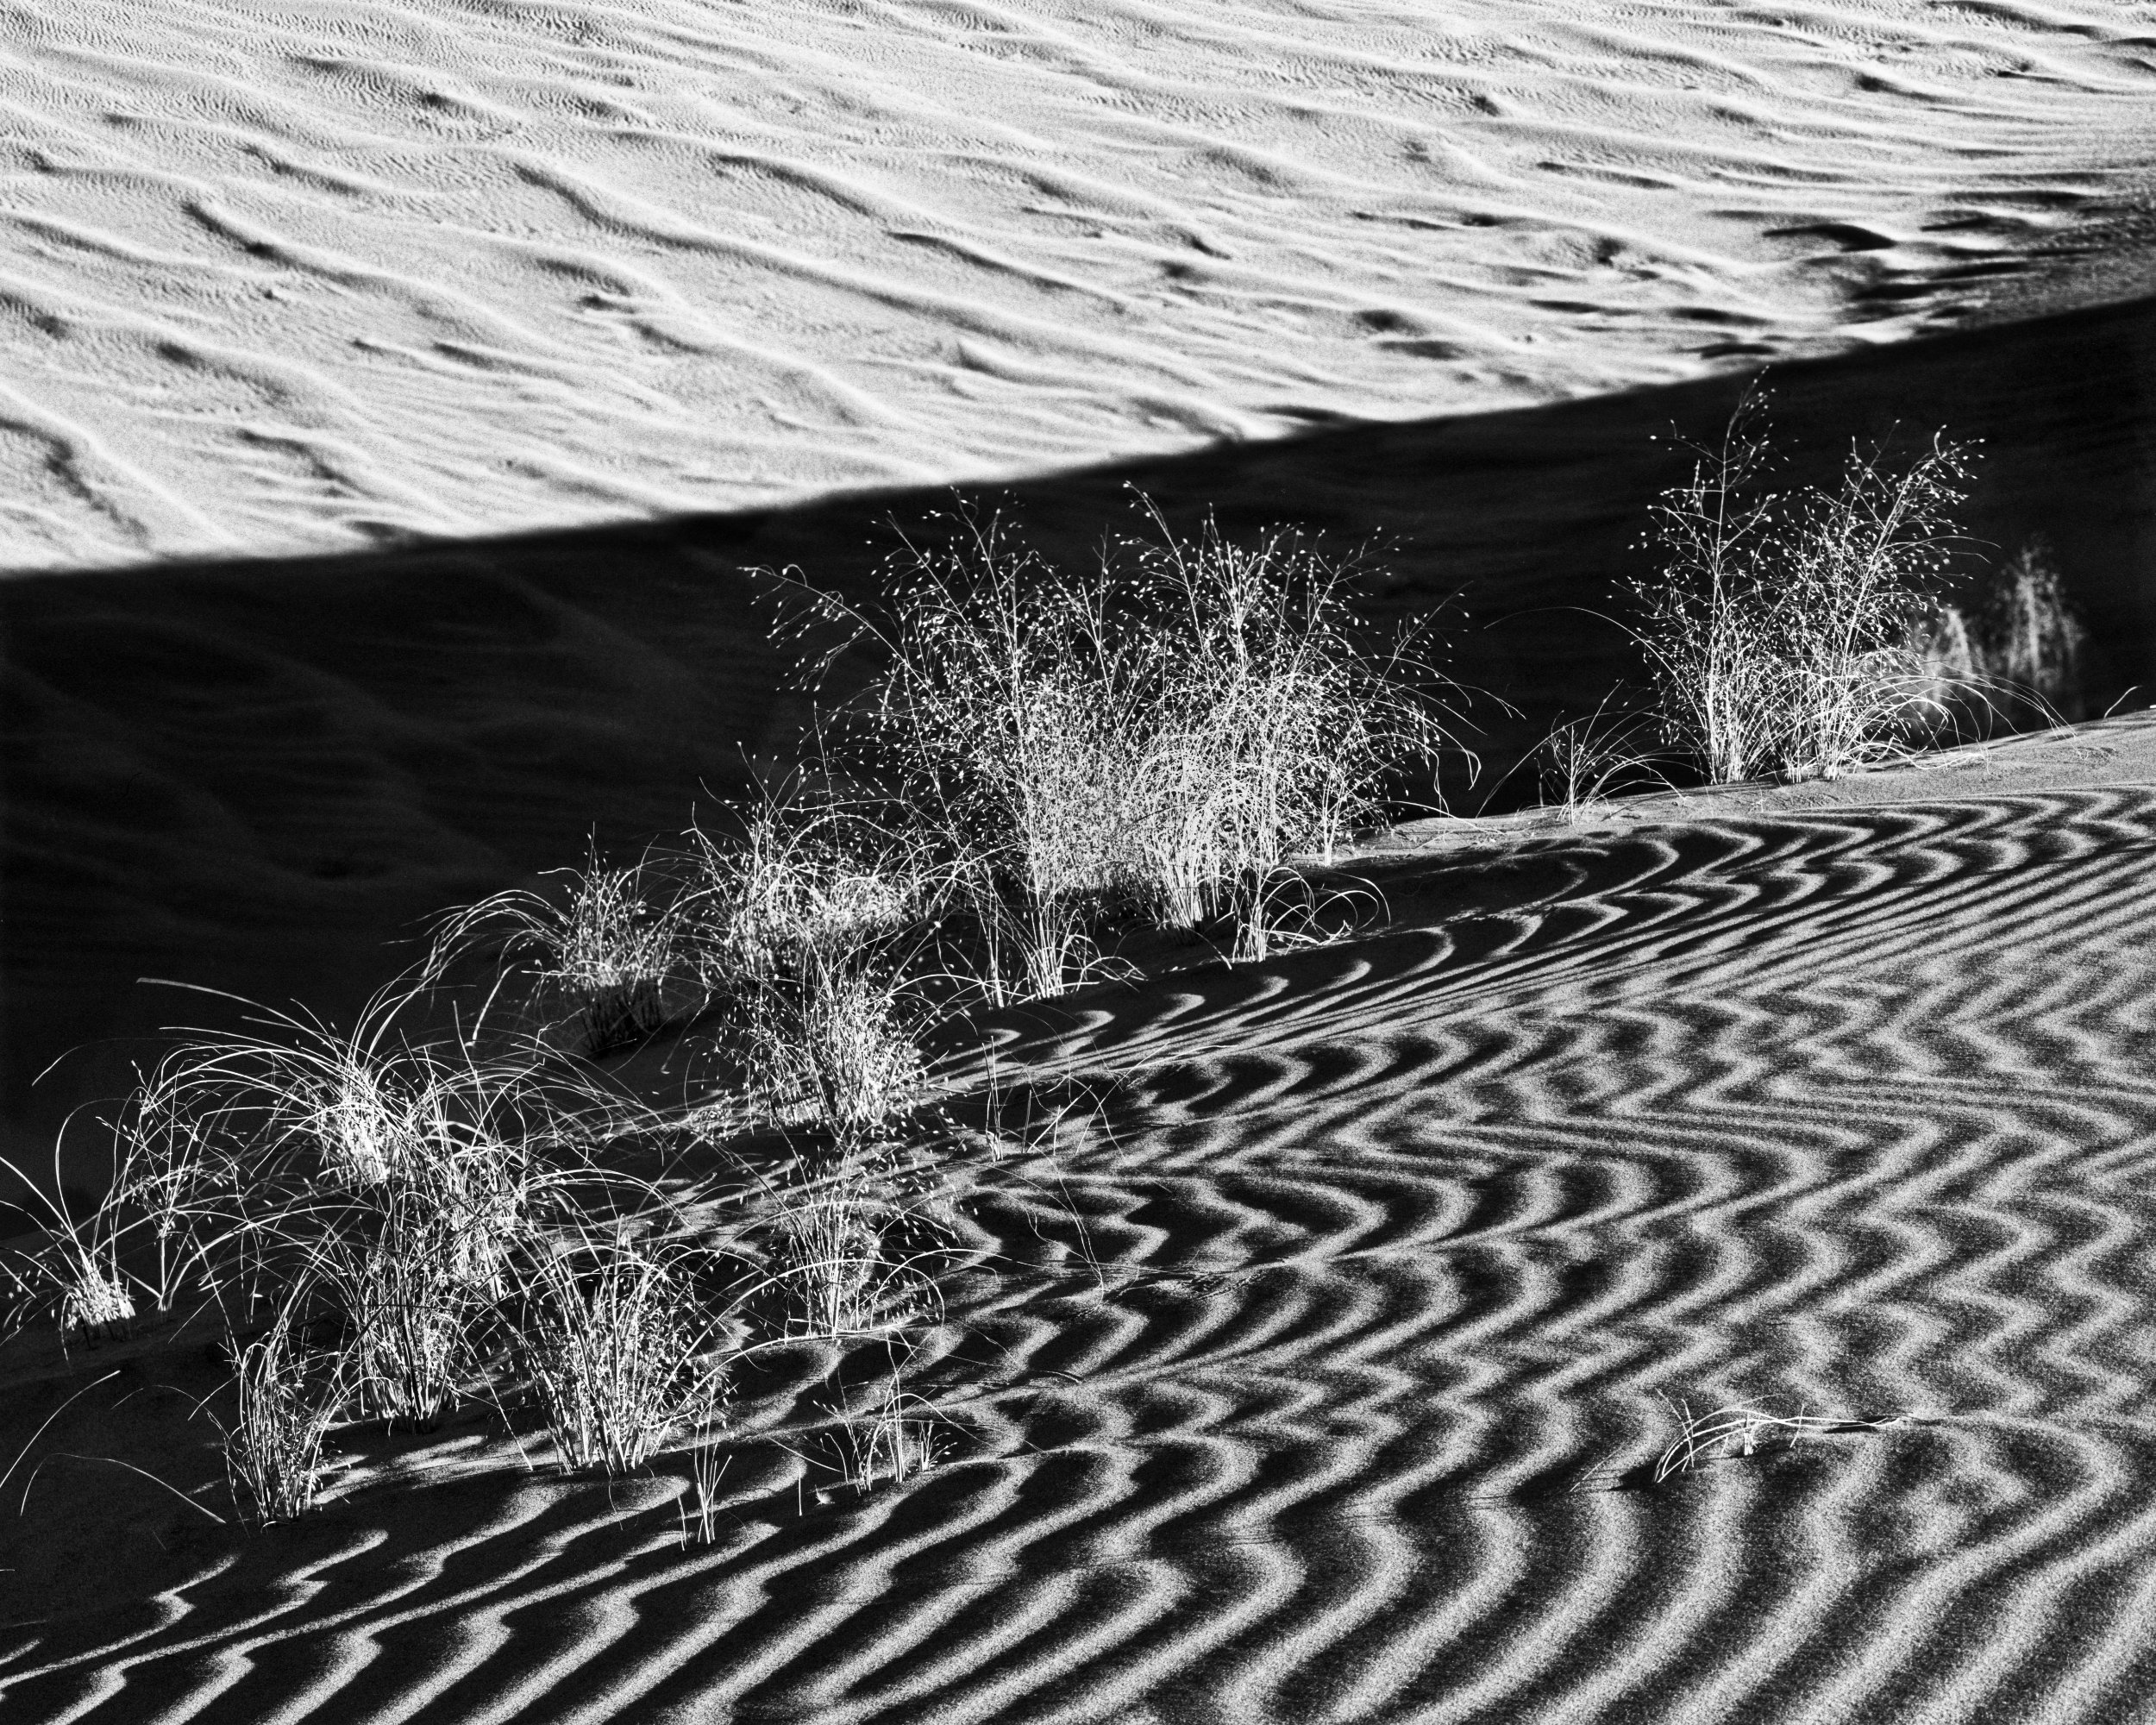 325.  Sand Dune and Plants